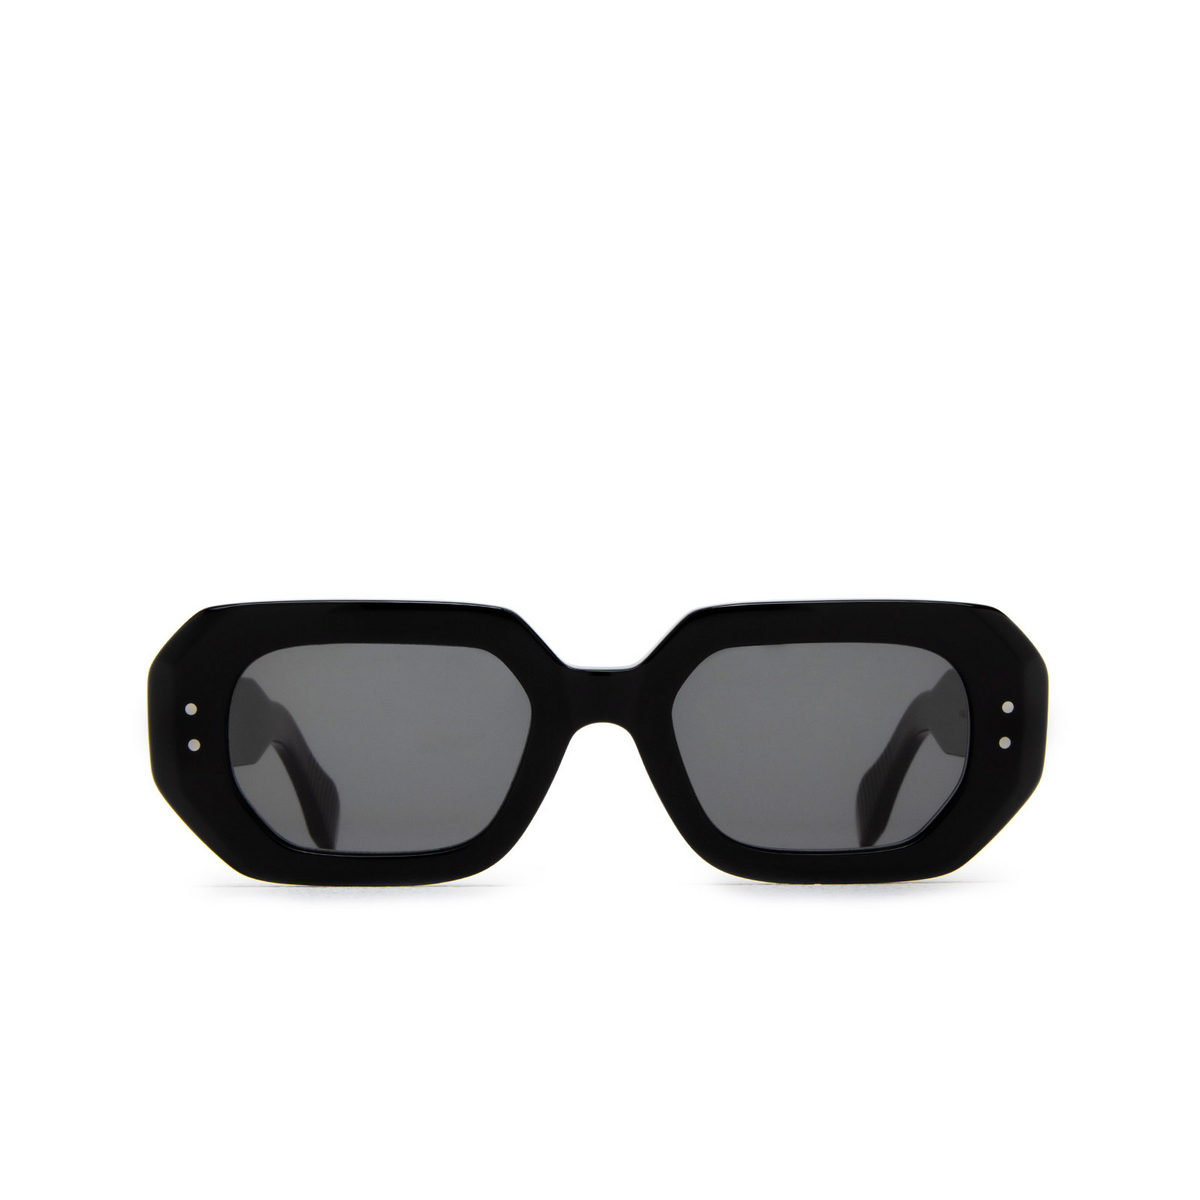 Cubitts GRIMALDI Sunglasses GRI-R-BLA Black - front view